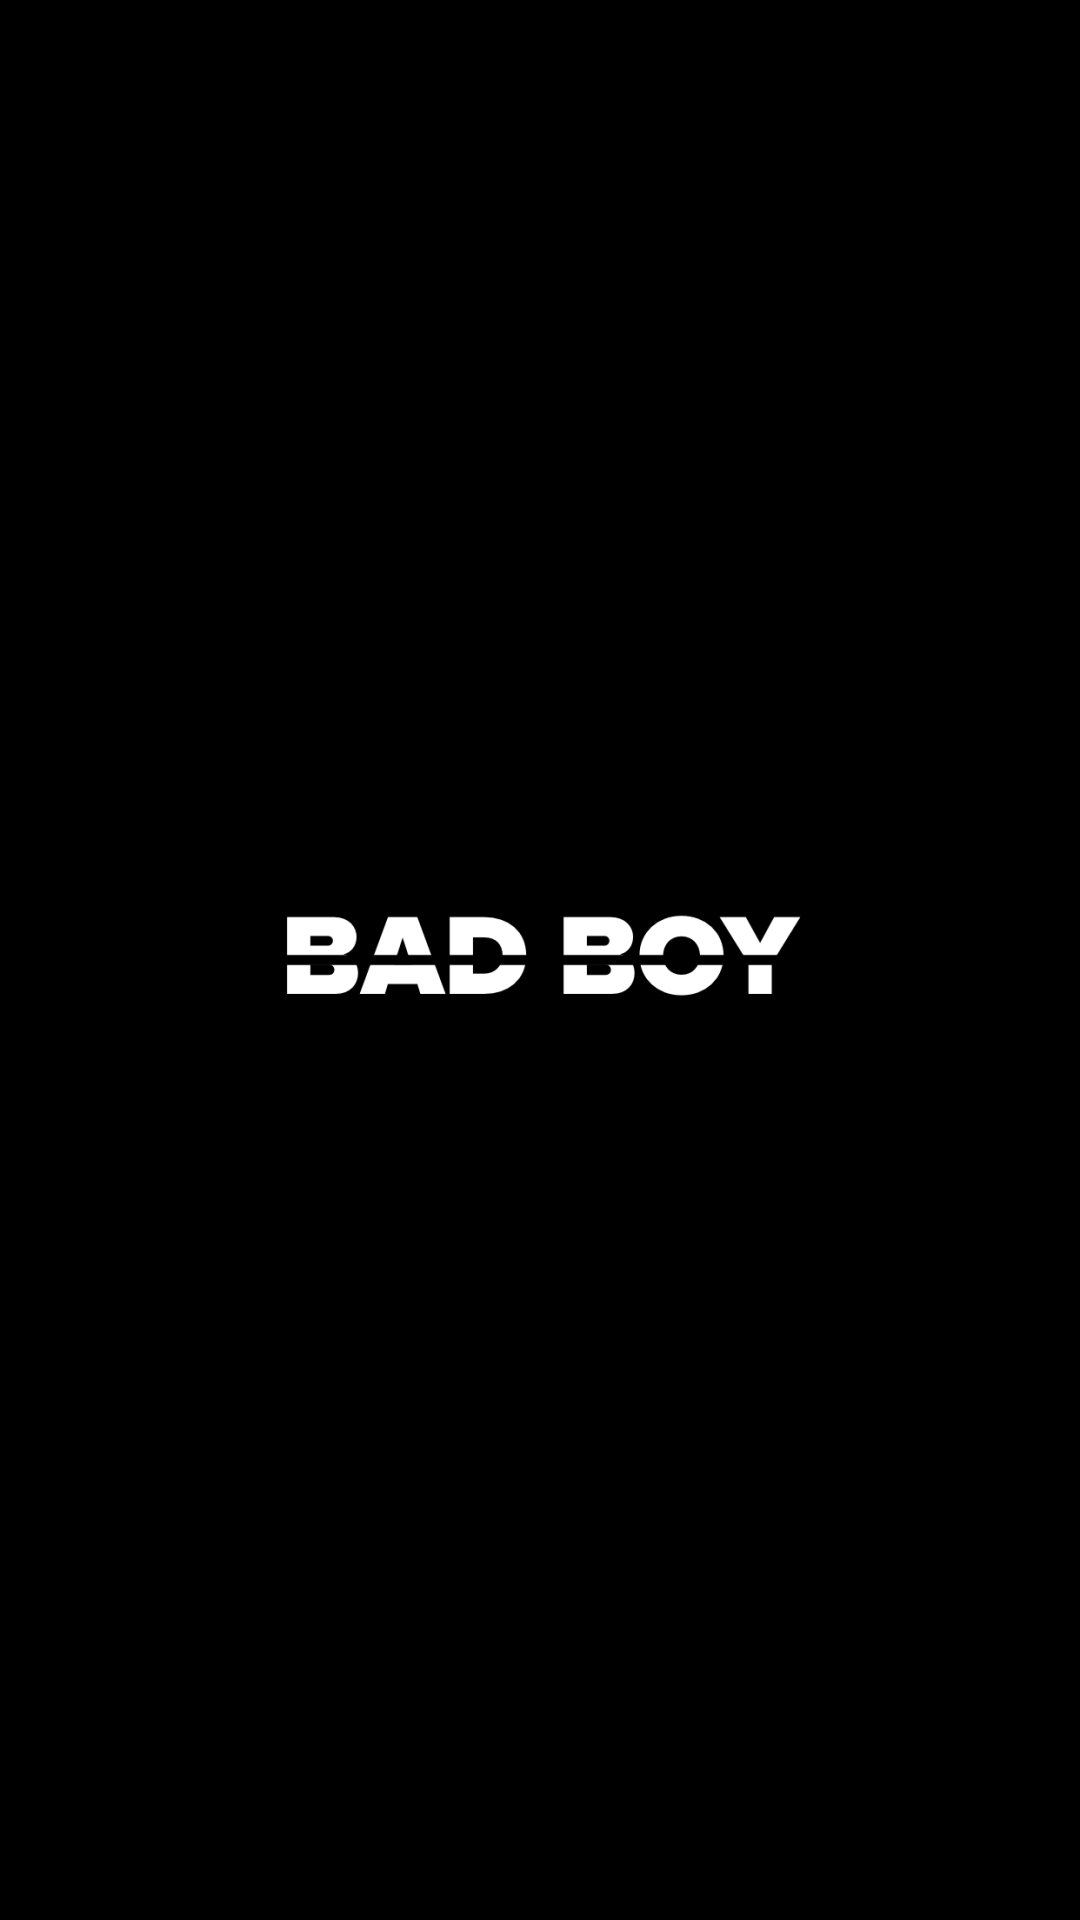 Bad boy.” Bad Boy - #REDVELVET. Boys wallpaper, Bad boys tumblr, HD cool wallpaper